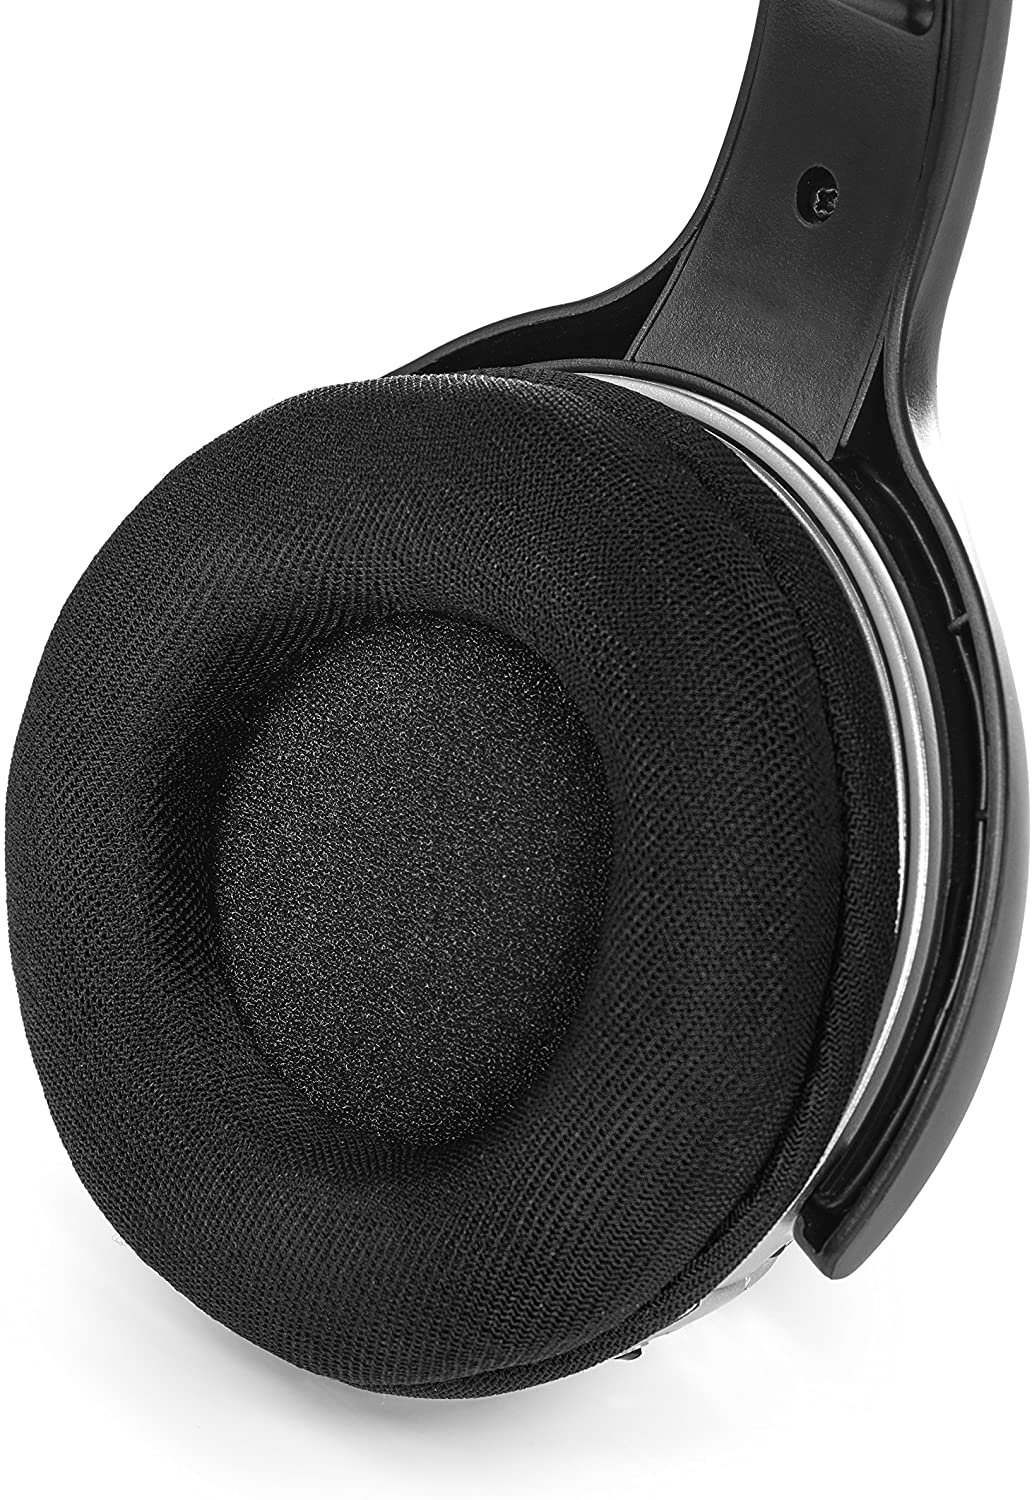 Unisar Tv Listener J3 Extra Headset Wireless Headphones